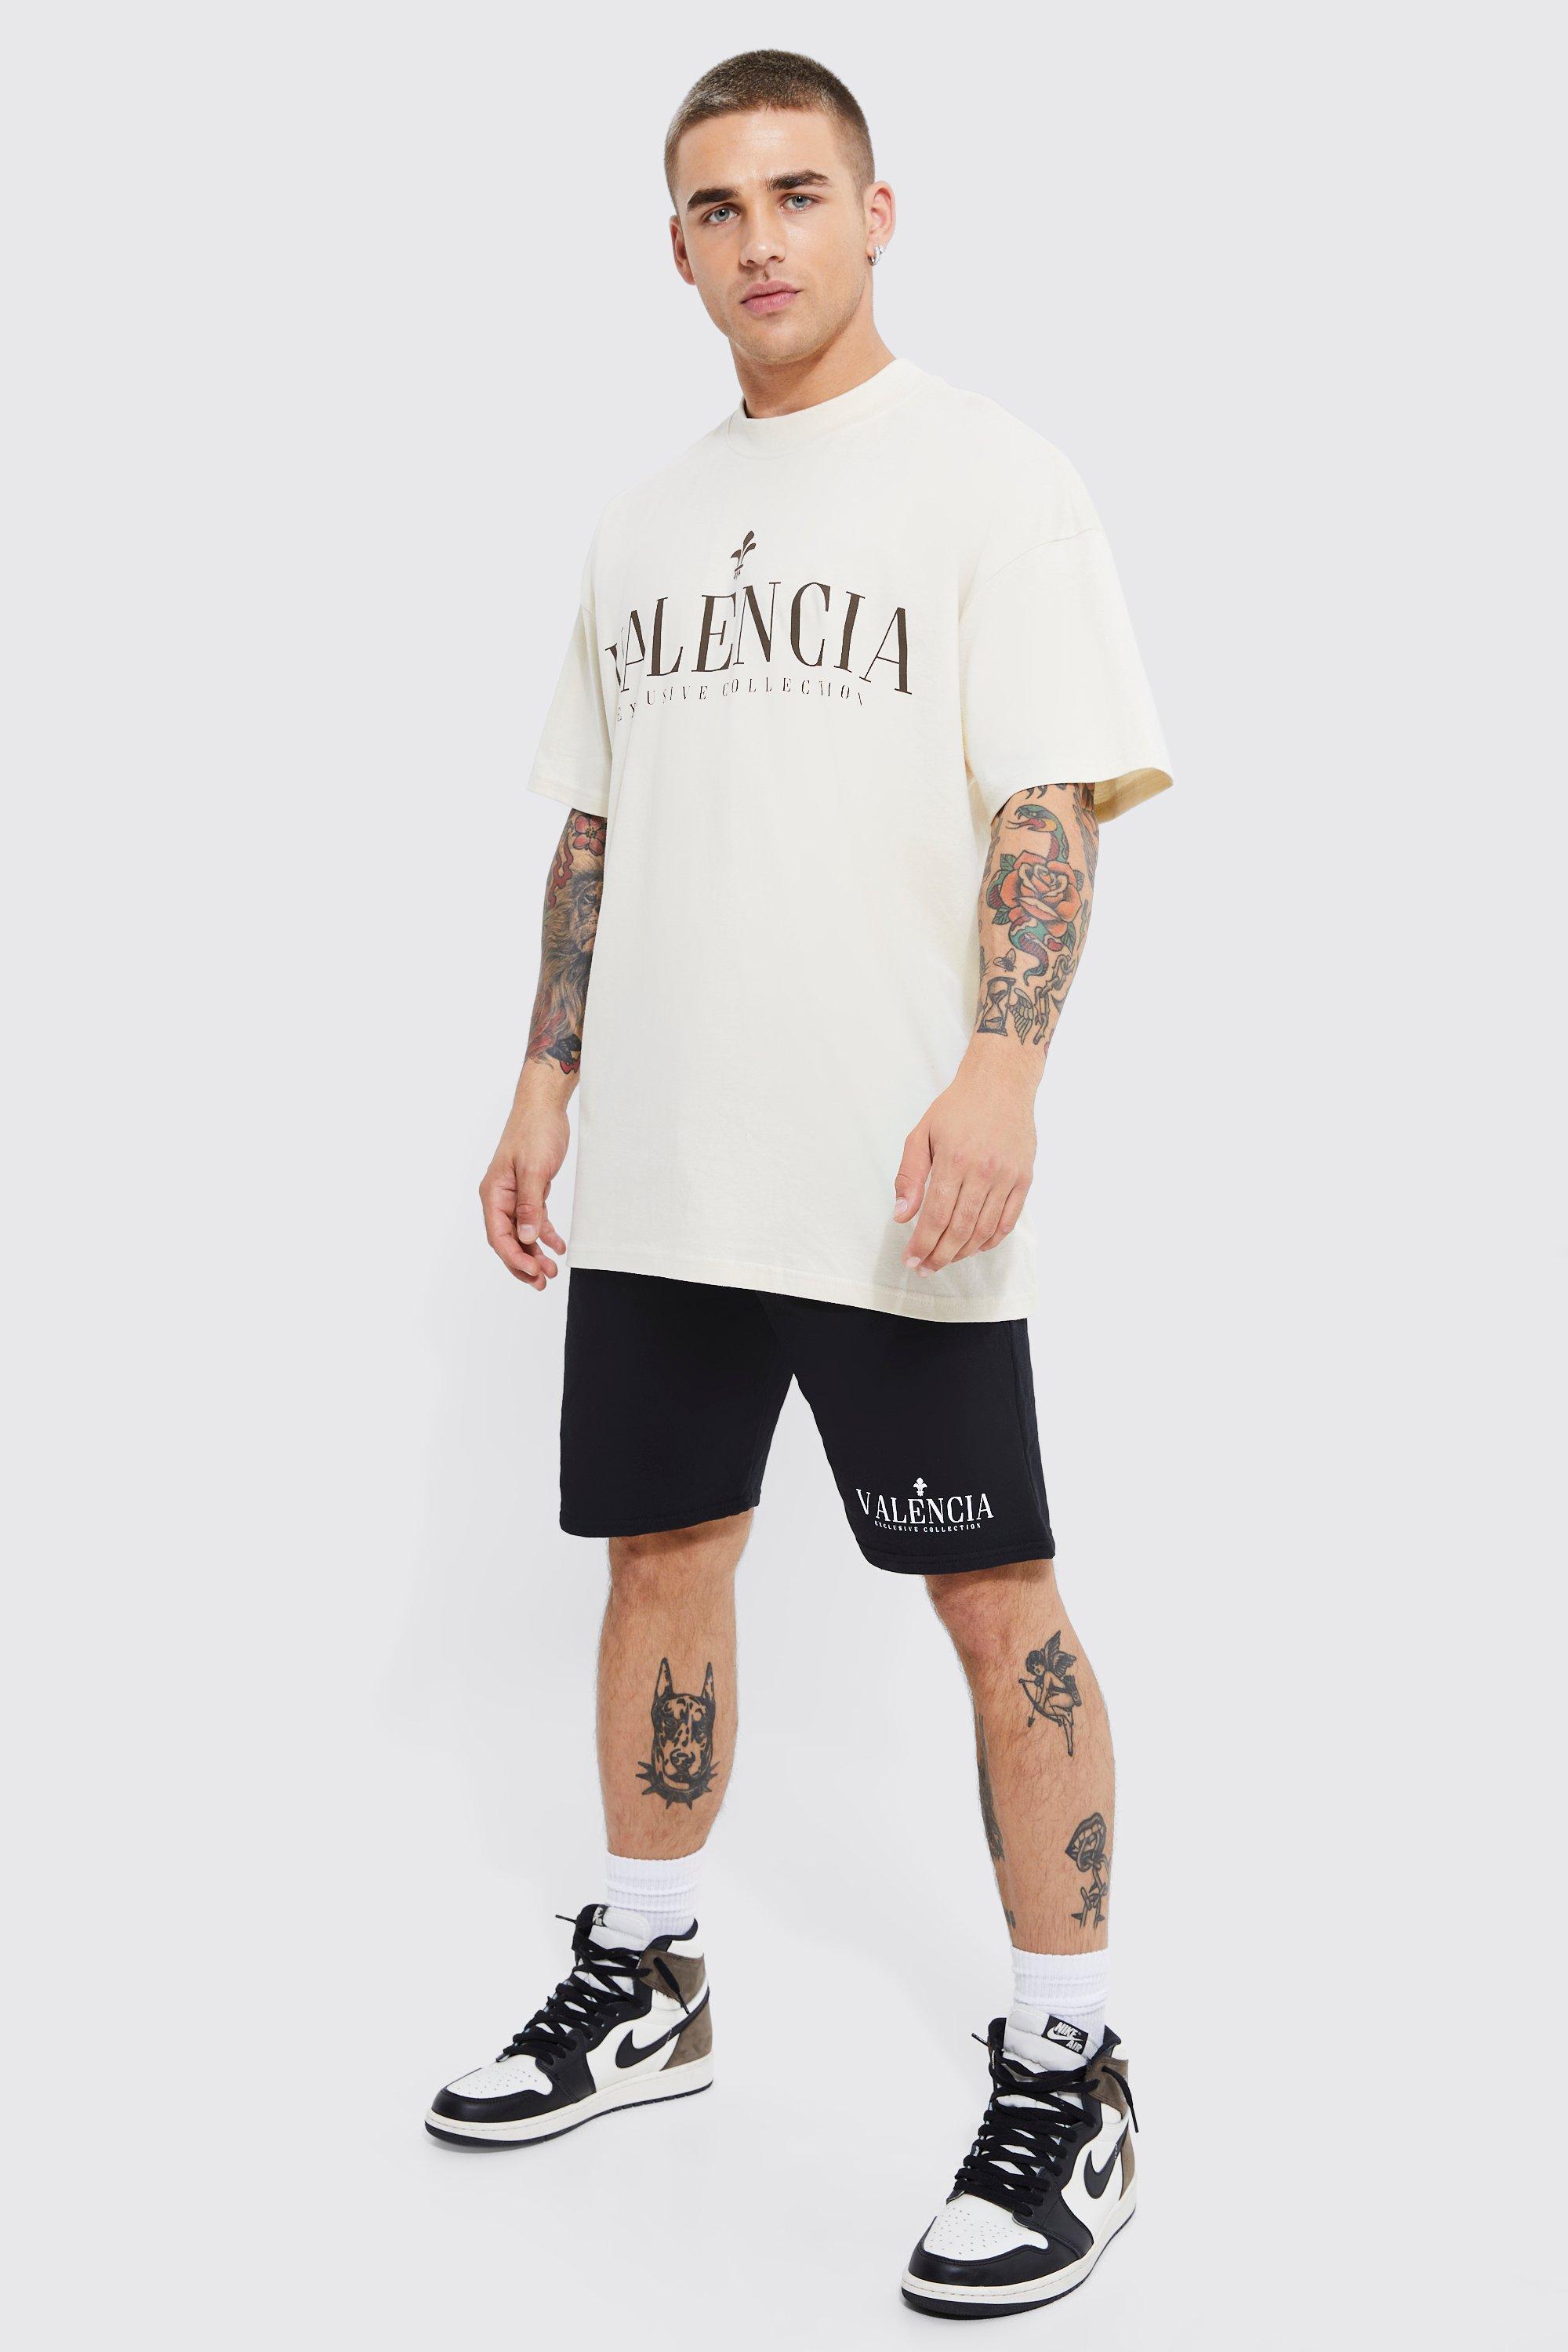 Mens Black Oversized Valencia T-shirt And Short Set, Black